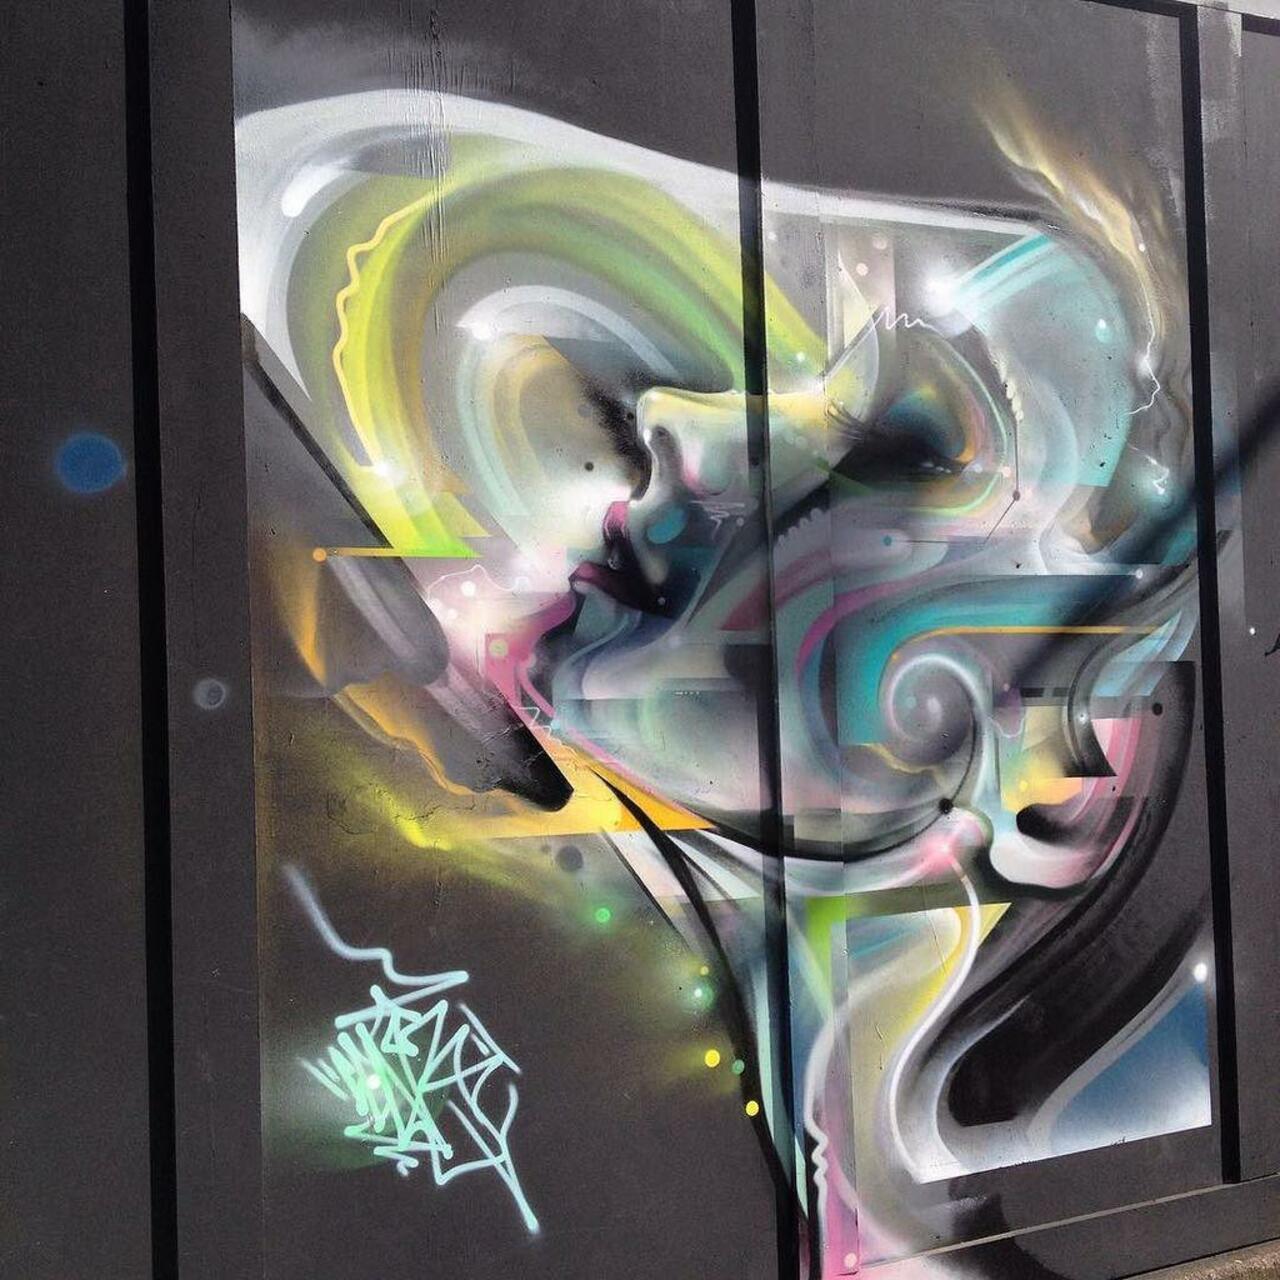 RT @larioscar: @StArtEverywhere: #streetart #graffiti #streetartlondon #london #thisislondon by isadarko http://t.co/tnjZKBVt6G maravilhoso